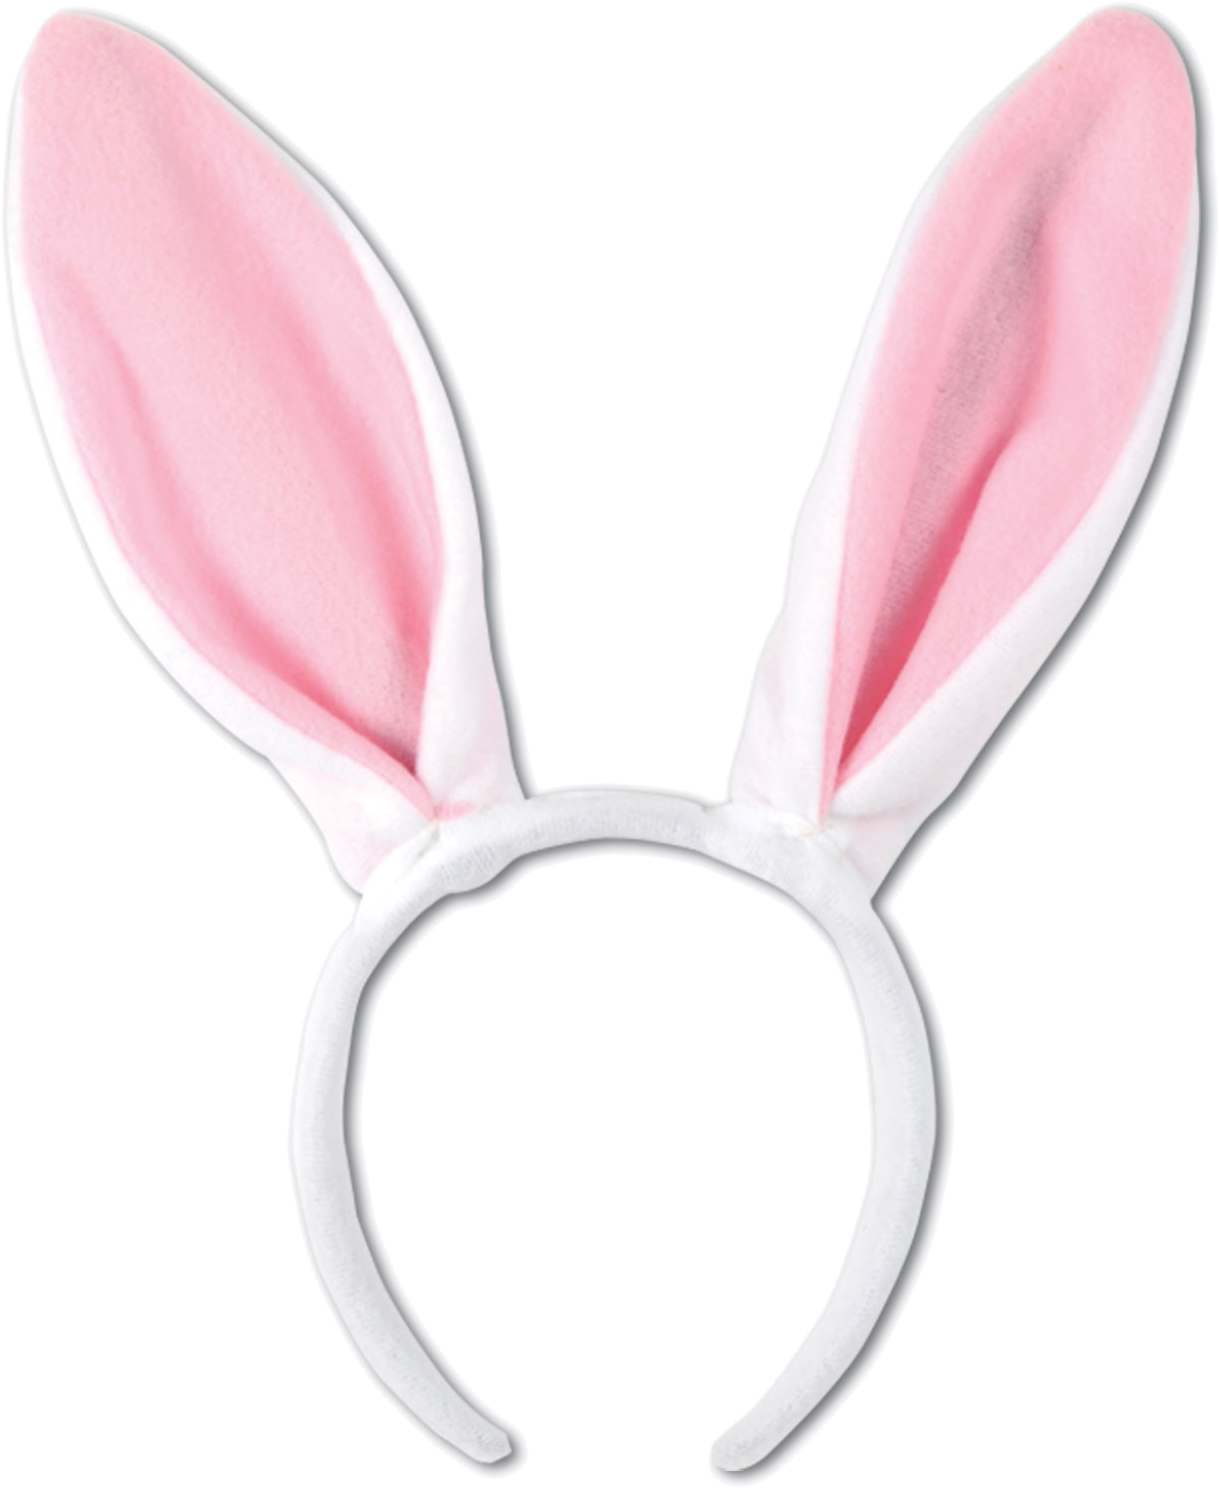 Bunny Ears Png 1219 X 1488